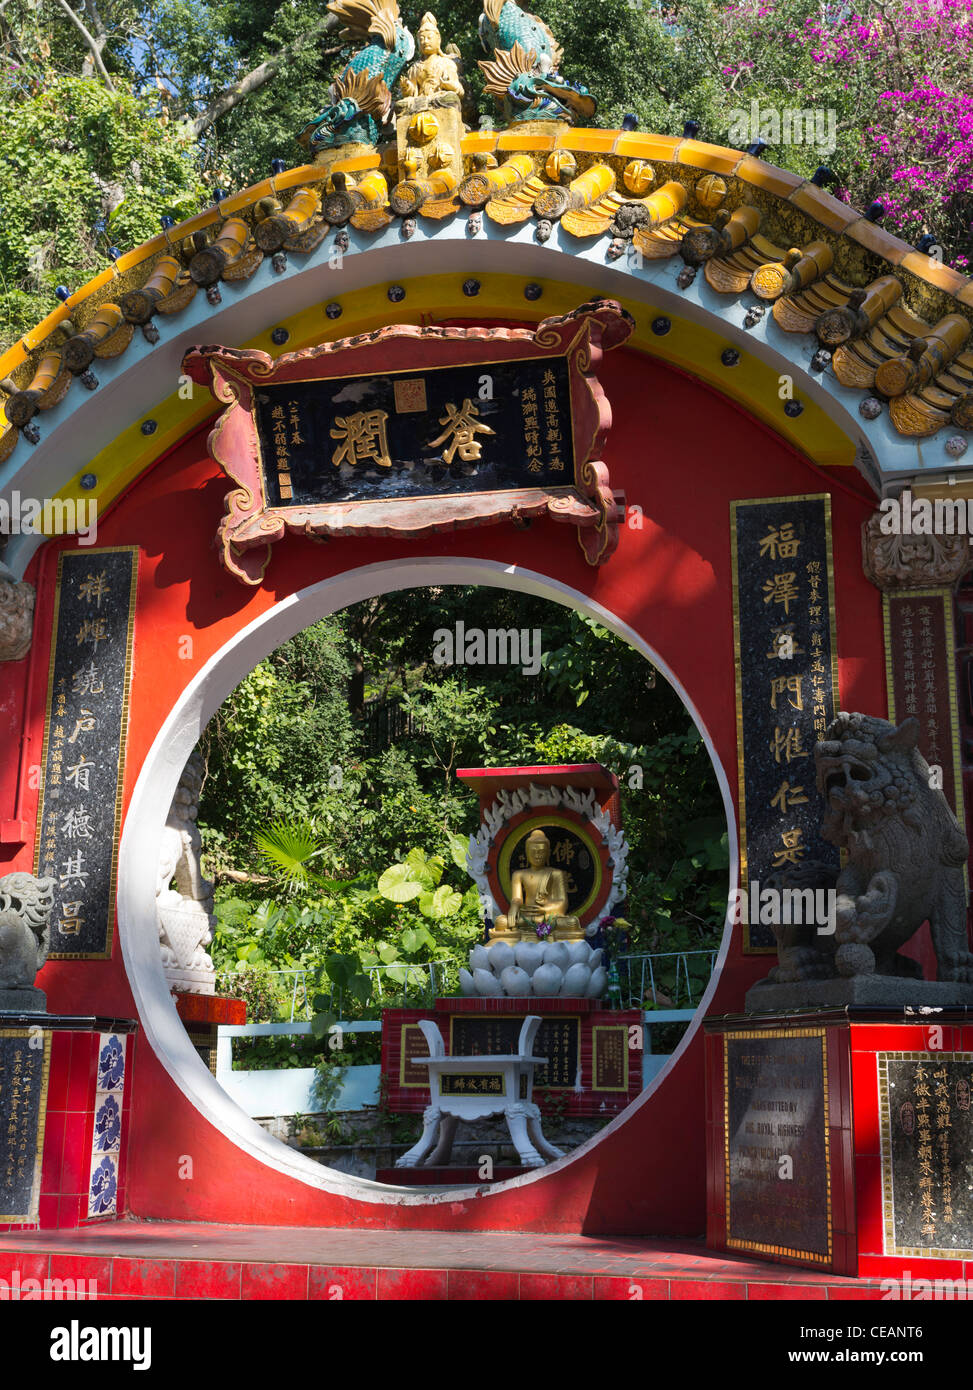 dh Chinese Feng Shui REPULSE BAY HONG KONG Fung Shui porta circolare porta fortuna porta fortuna cina tempio taoista buona fortuna taoismo daoismo Foto Stock